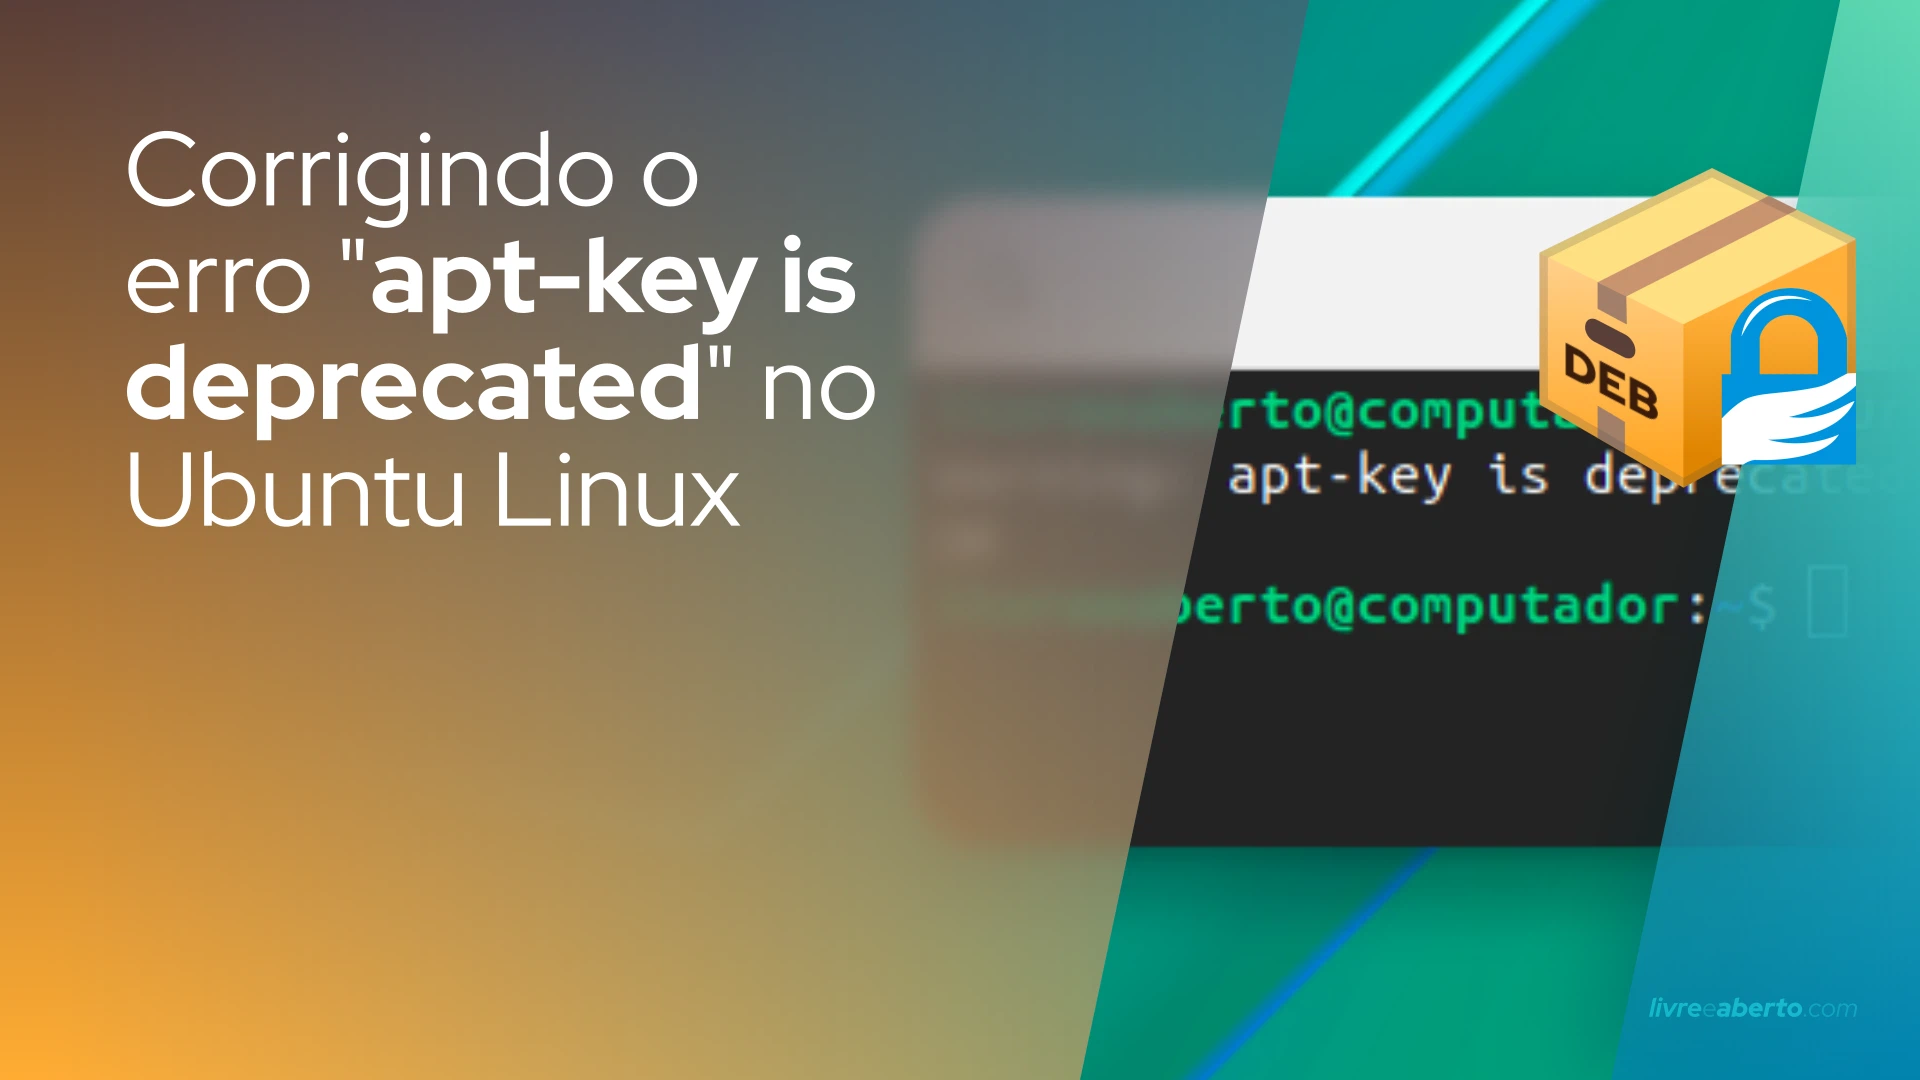 Corrigindo o erro 'apt-key is deprecated. Manage keyring files in tusted.gpg.d instedad' no Ubuntu Linux